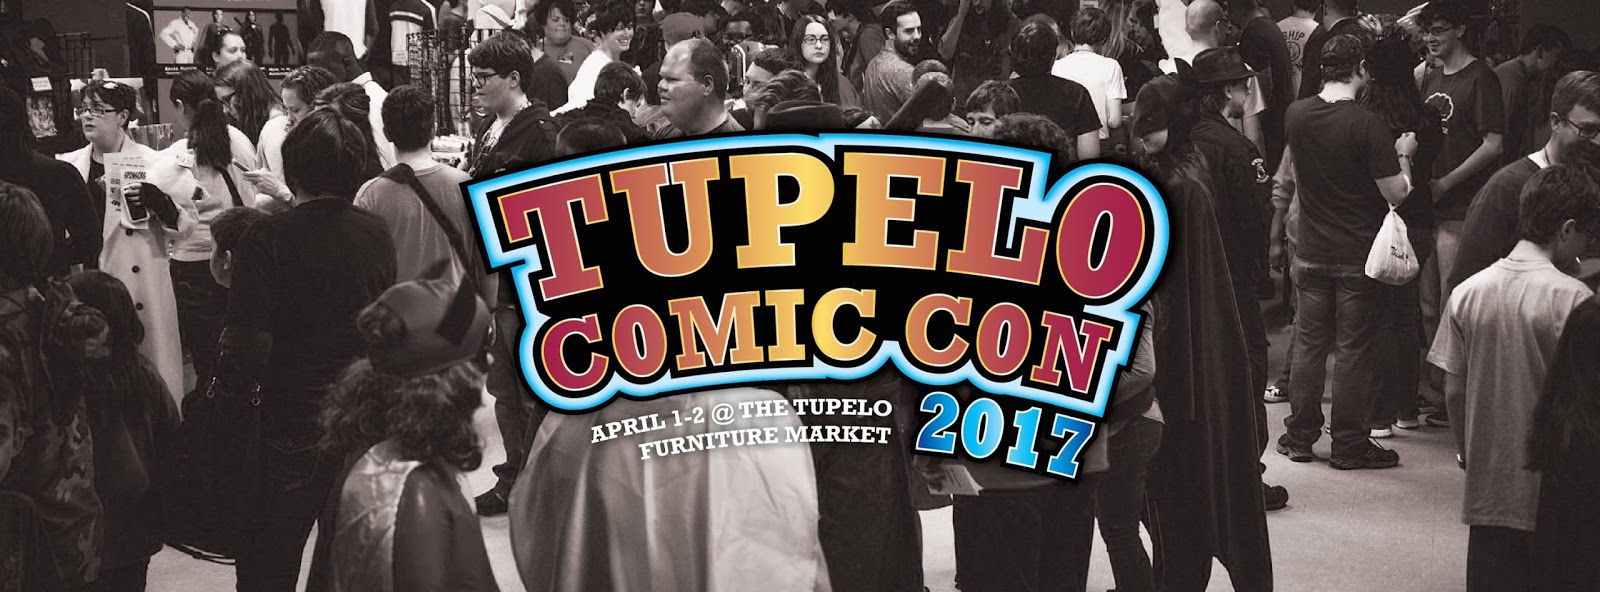 WrestlingNewsCenter will be at Tupelo Comic Con Wrestling News Center